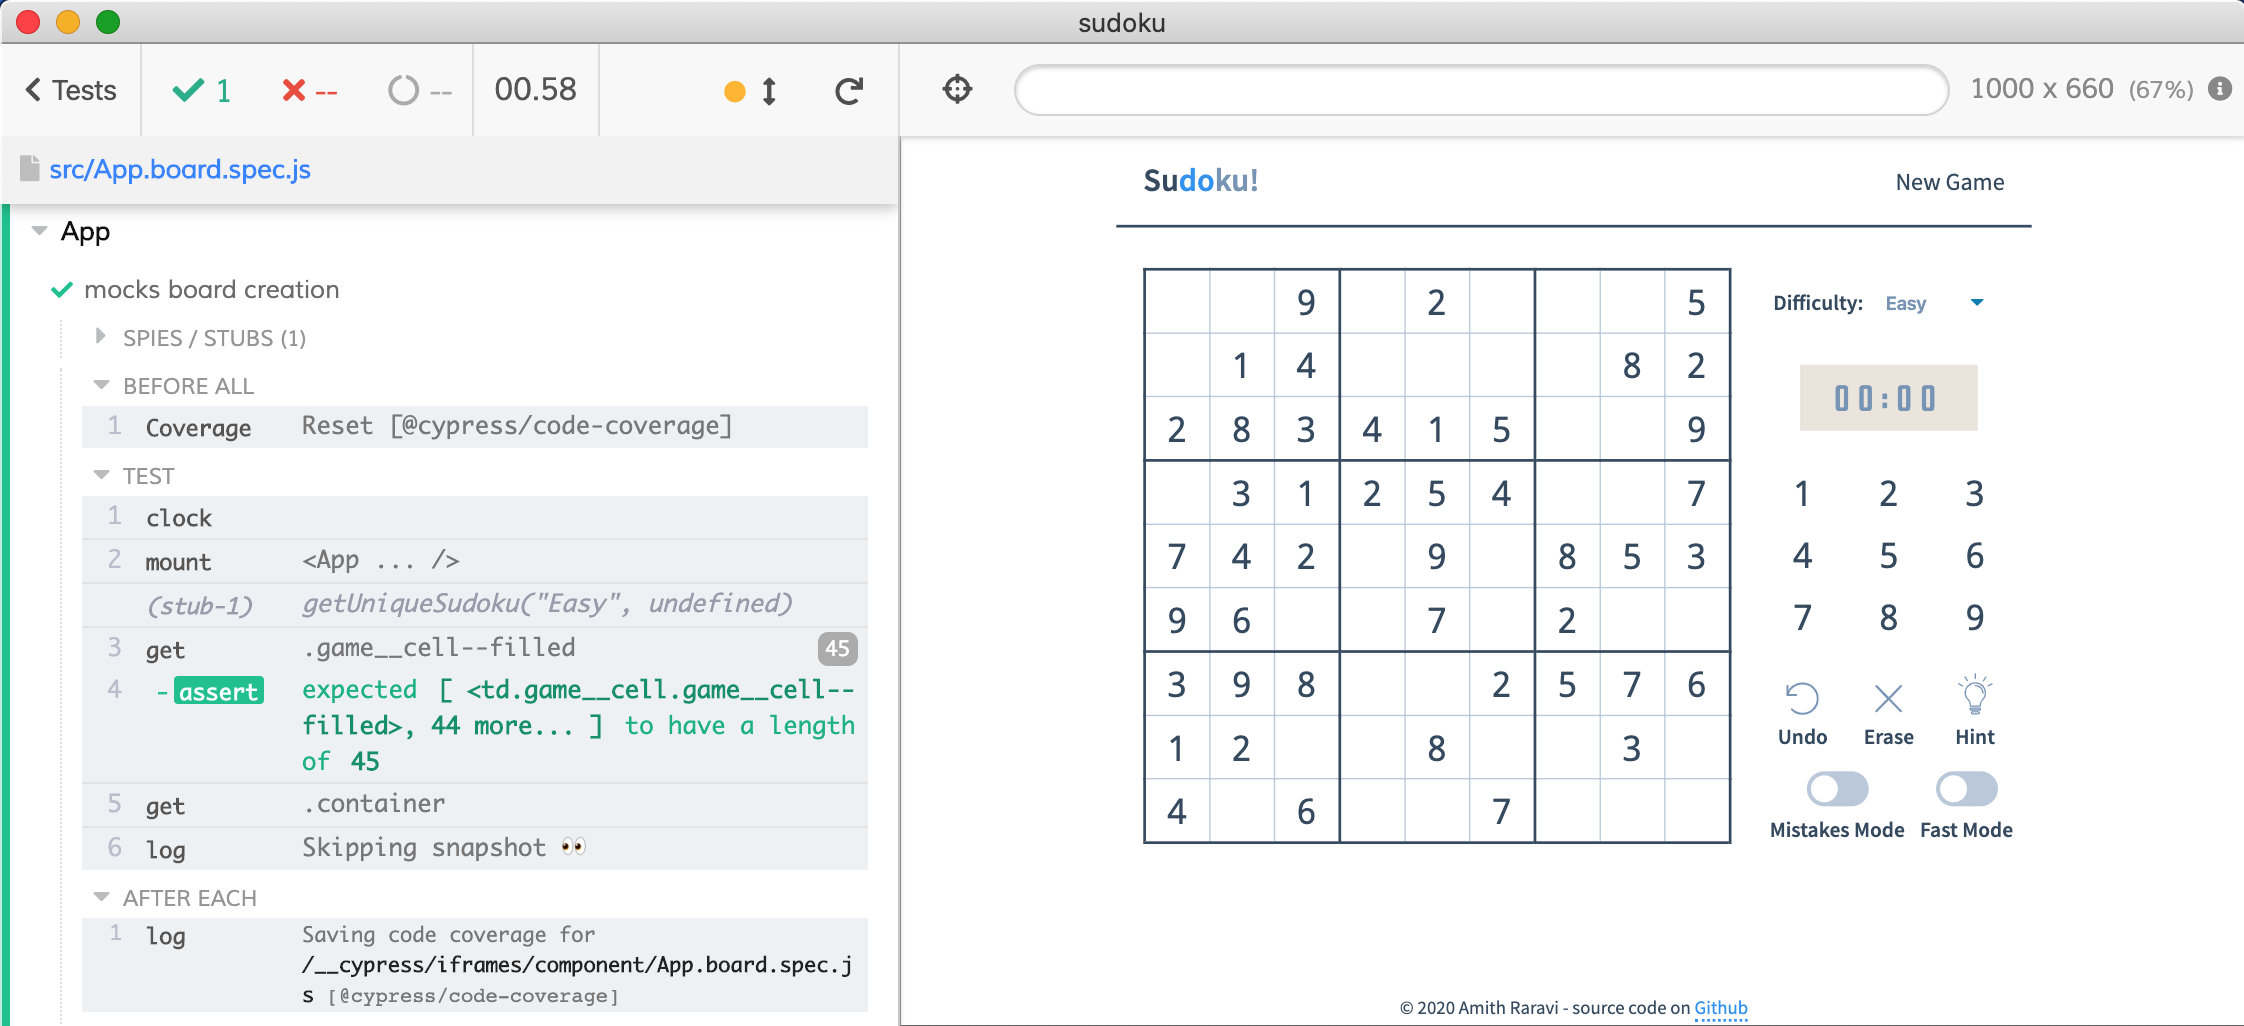 Mocked board creation produces the same Sudoku game